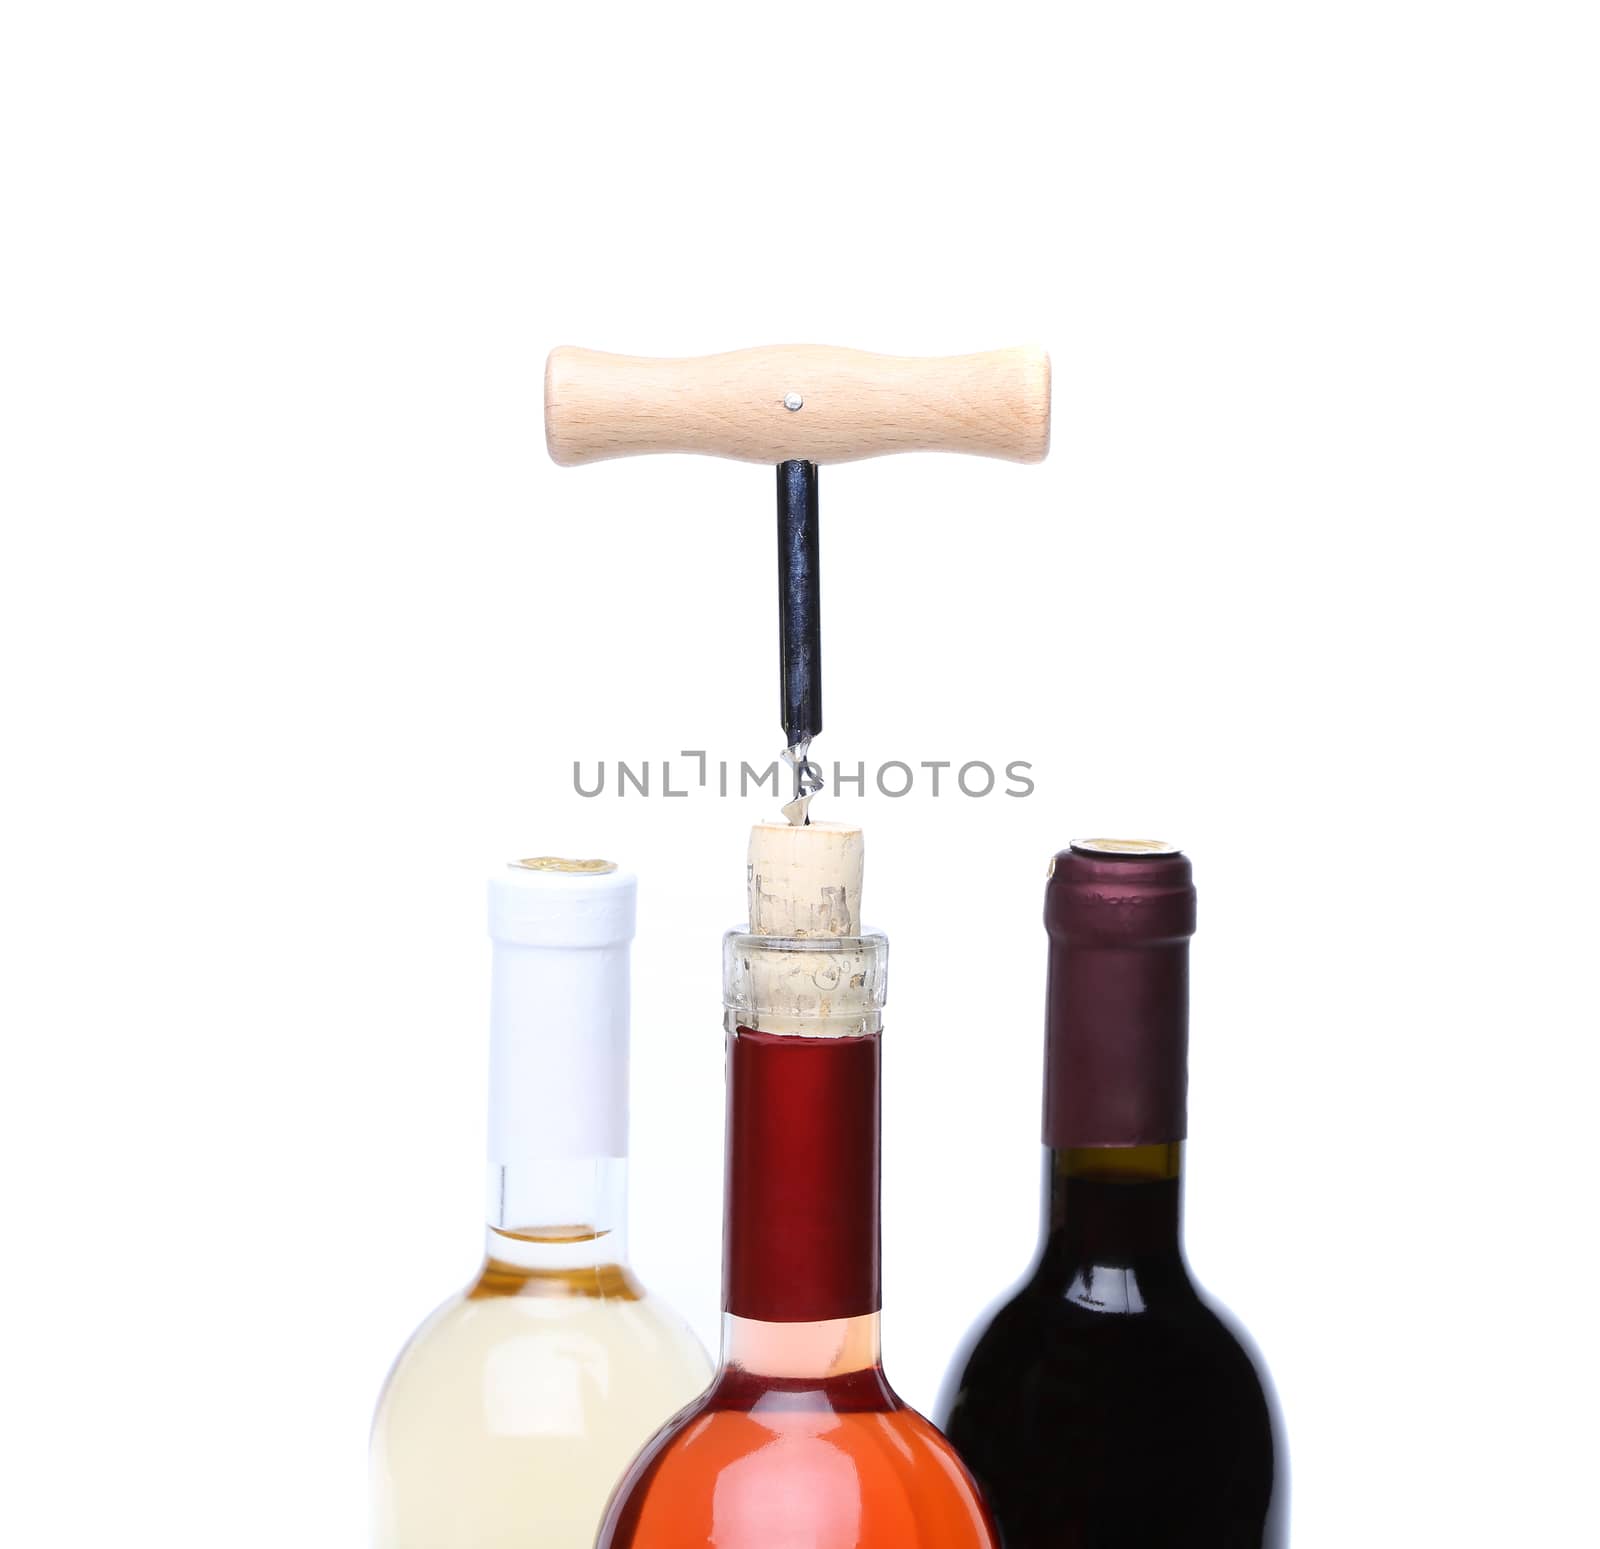 Opening three bottles of wine by indigolotos